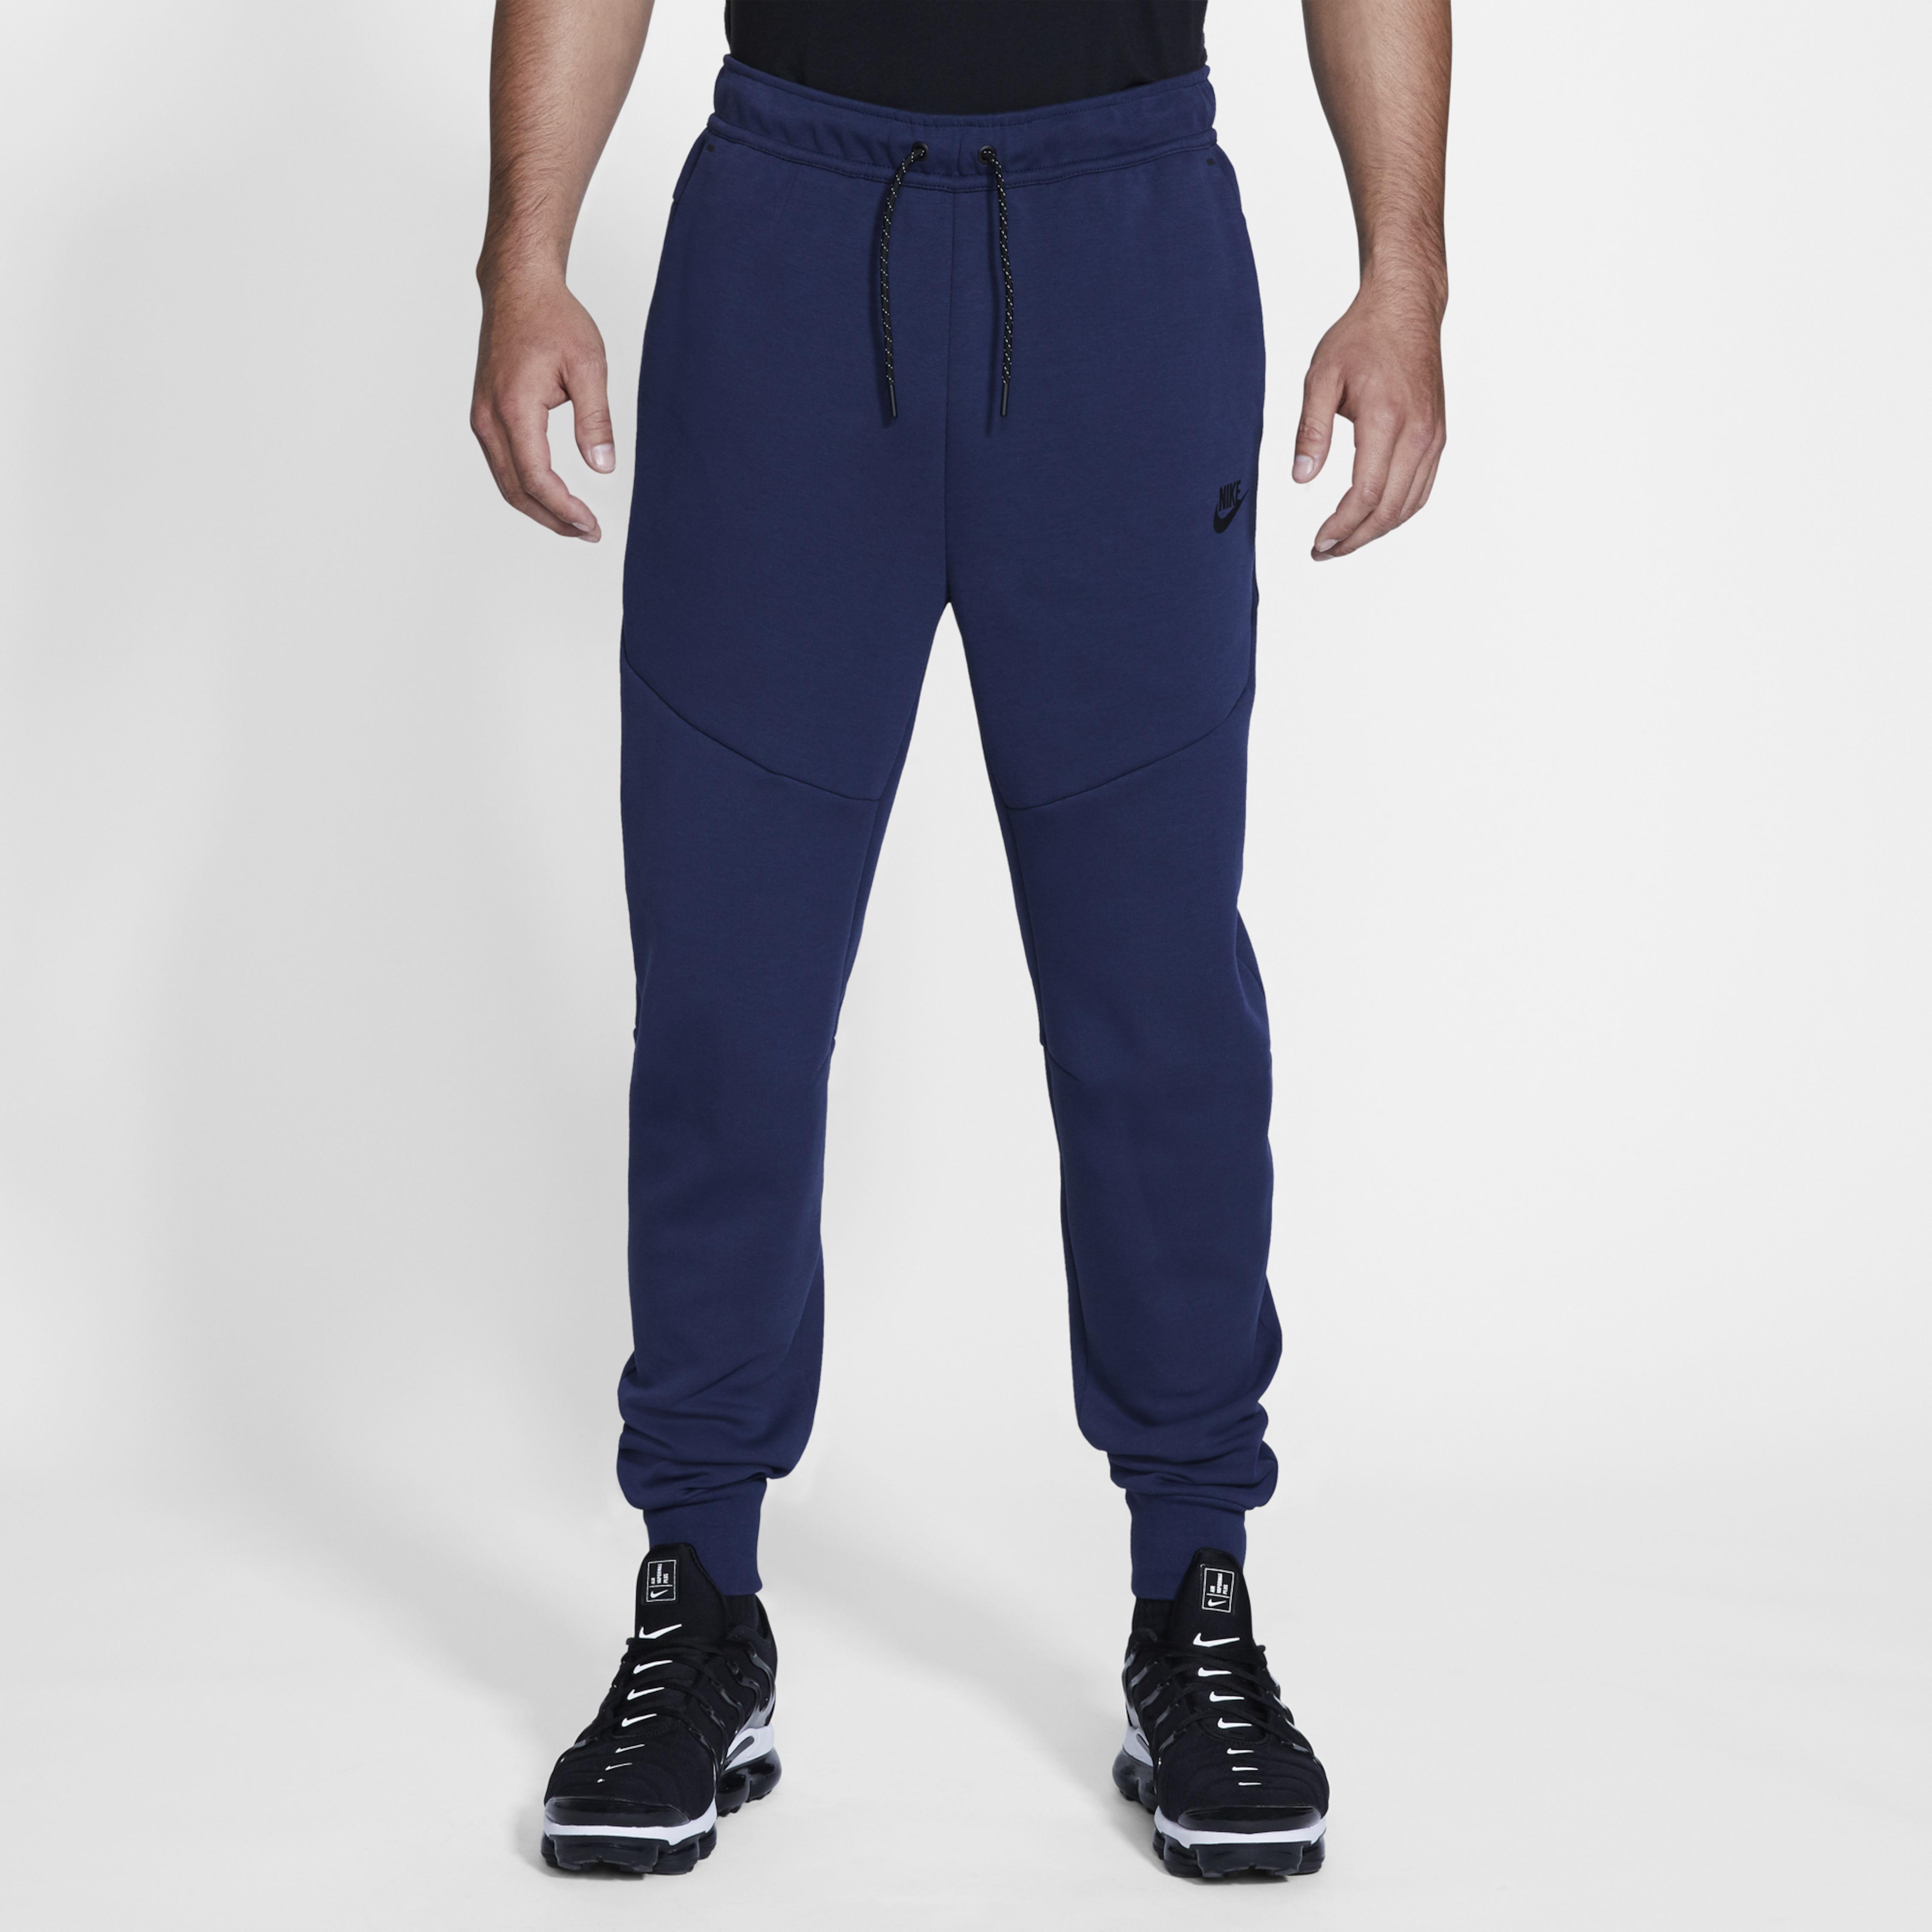 Nike Tech Fleece Jogger Pant in Midnight Navy/Black (Blue) for Men - Lyst